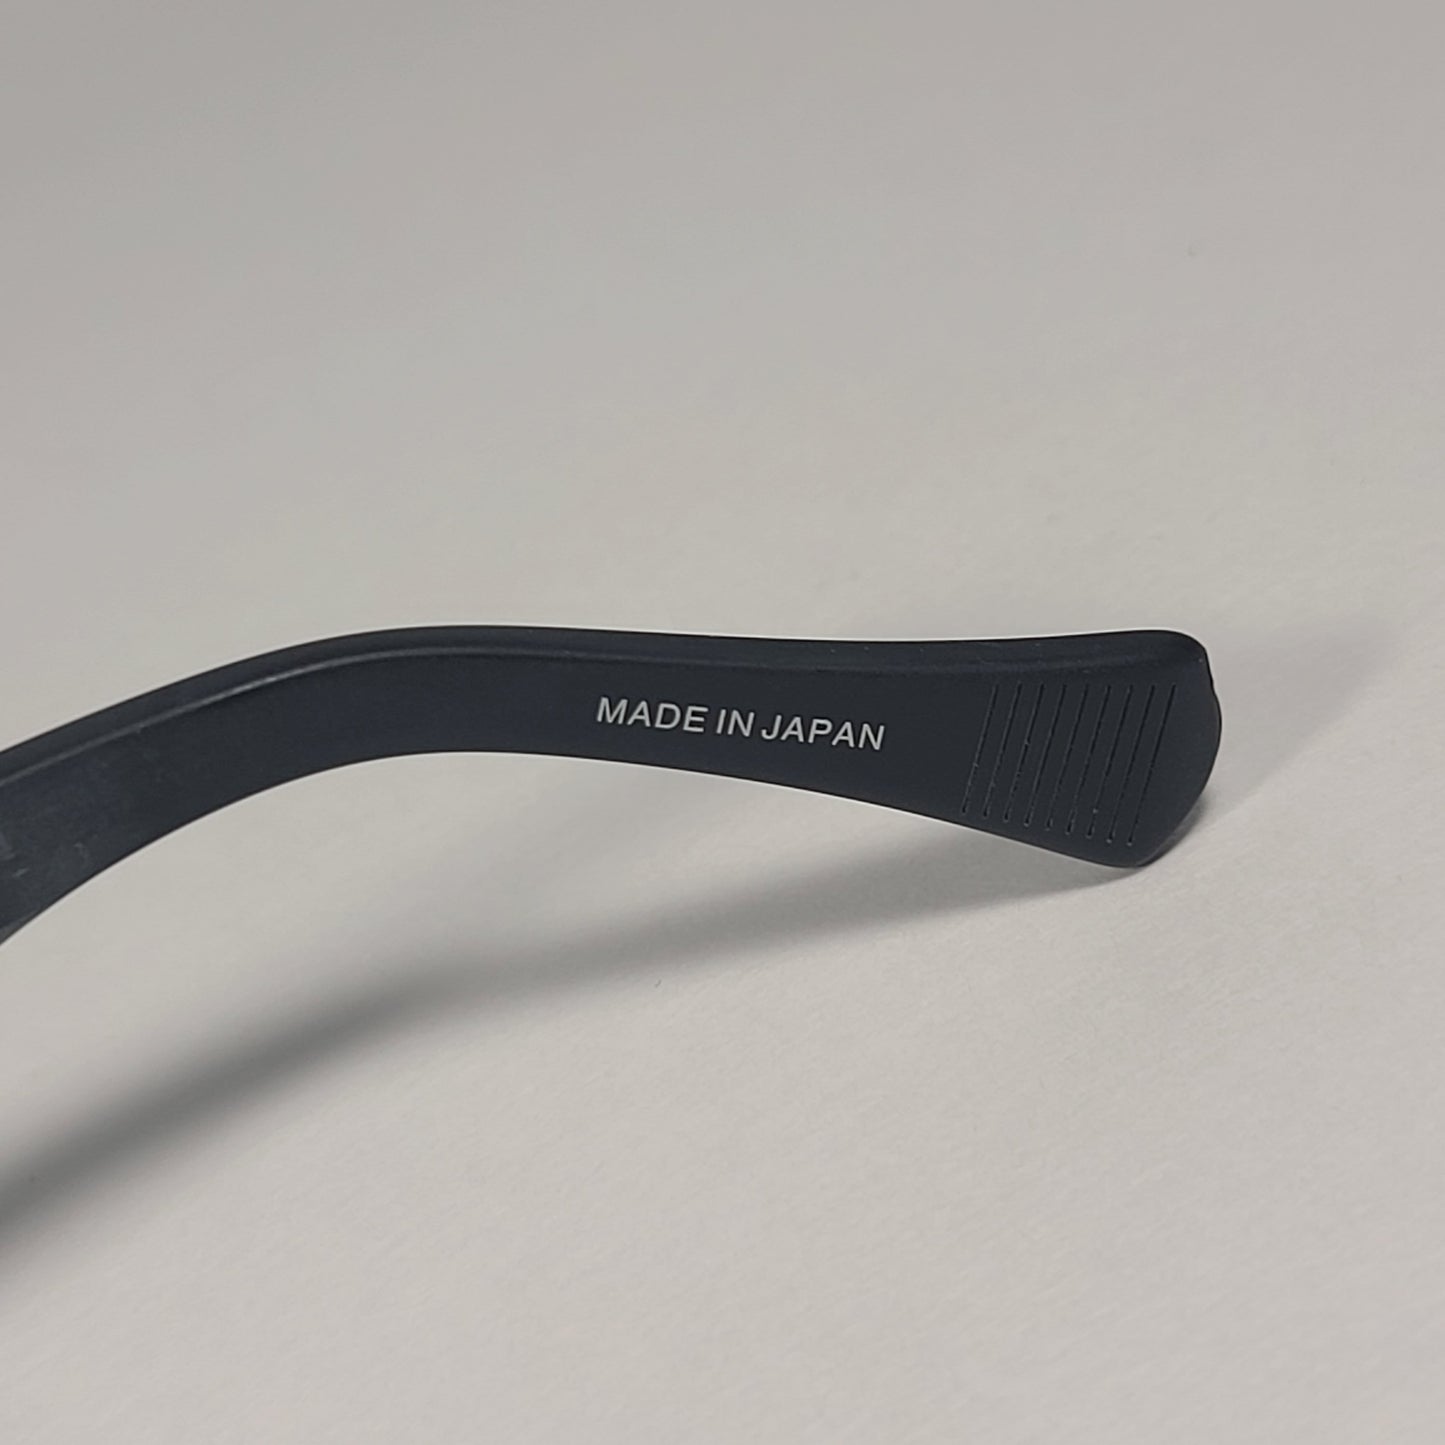 John Varvatos Men’s Rectangle Sunglasses V538 Matte Black Brown / Mirror Lens - Sunglasses